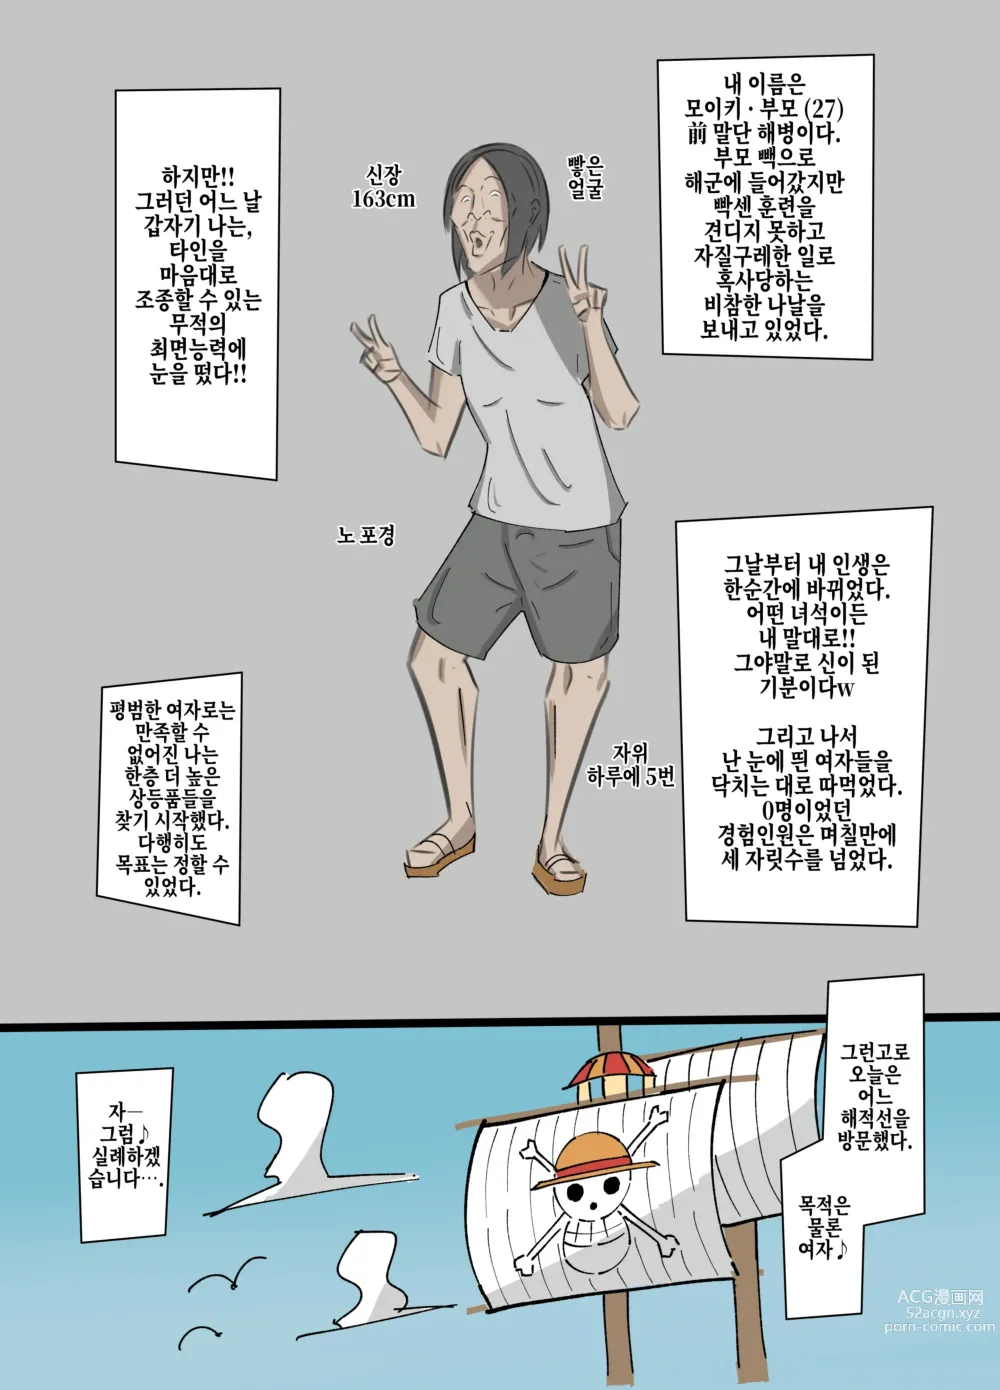 Page 3 of doujinshi 『원피스x무적능력 극혐남』